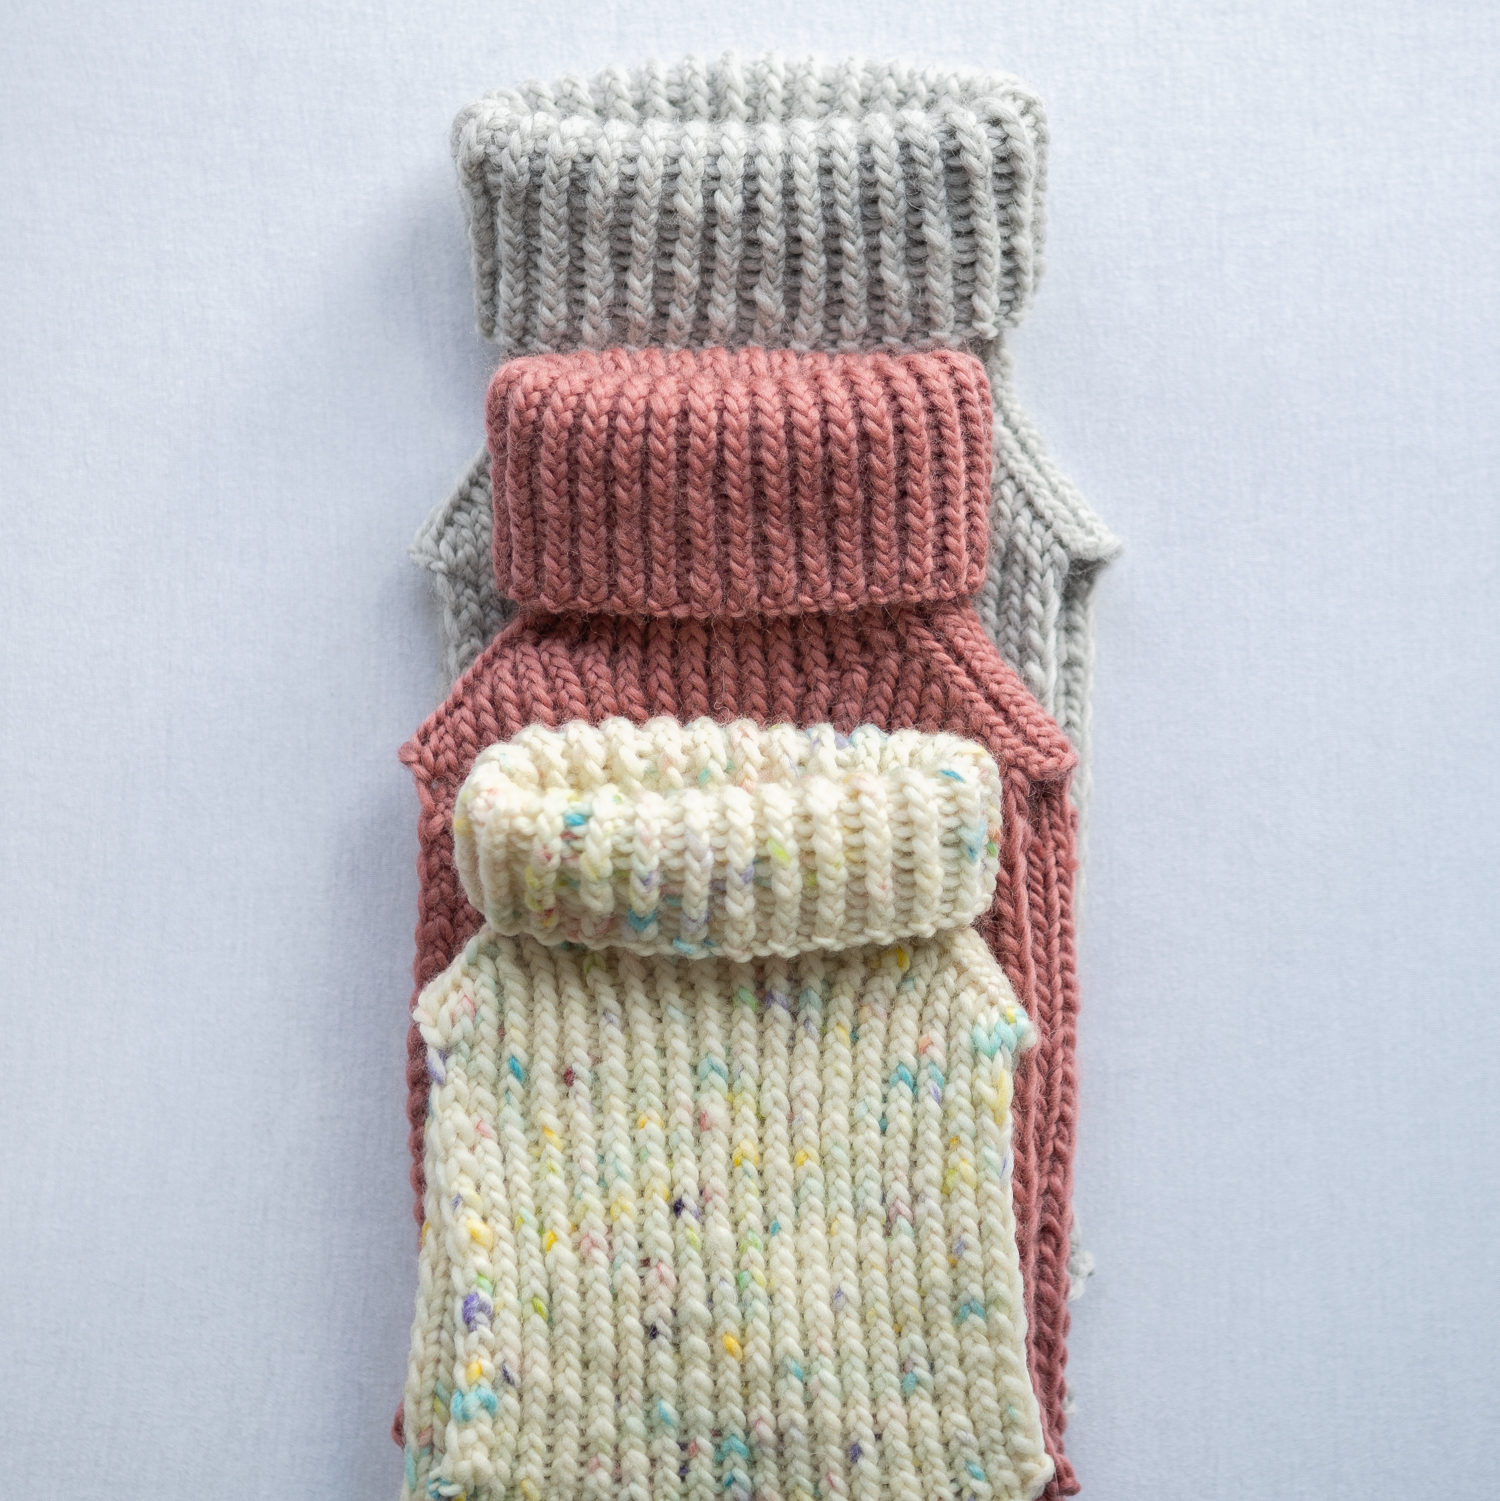  - NonStop neck kids | Neck warmer | Knitting kit - by HipKnitShop - 06/11/2020